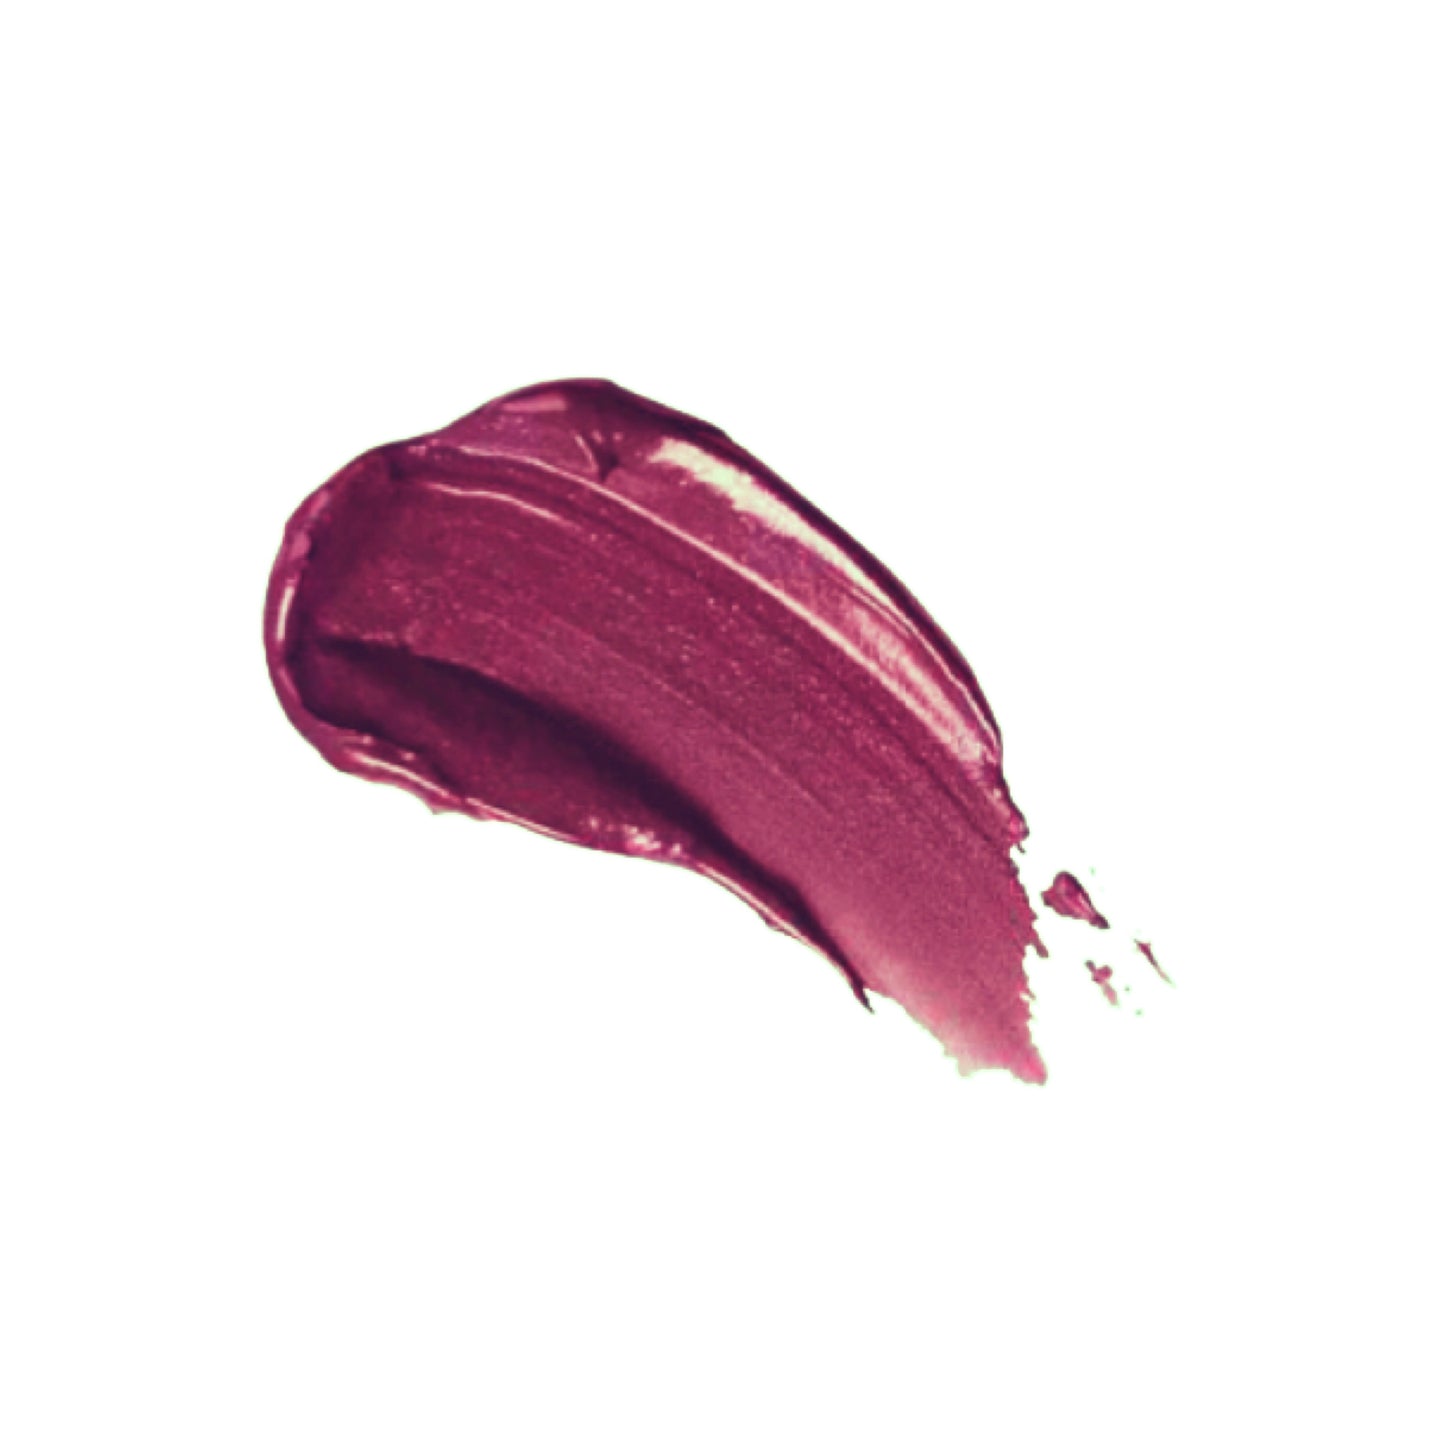 Velvet Rich "Berry Lovely" AMMA JO Lipstick